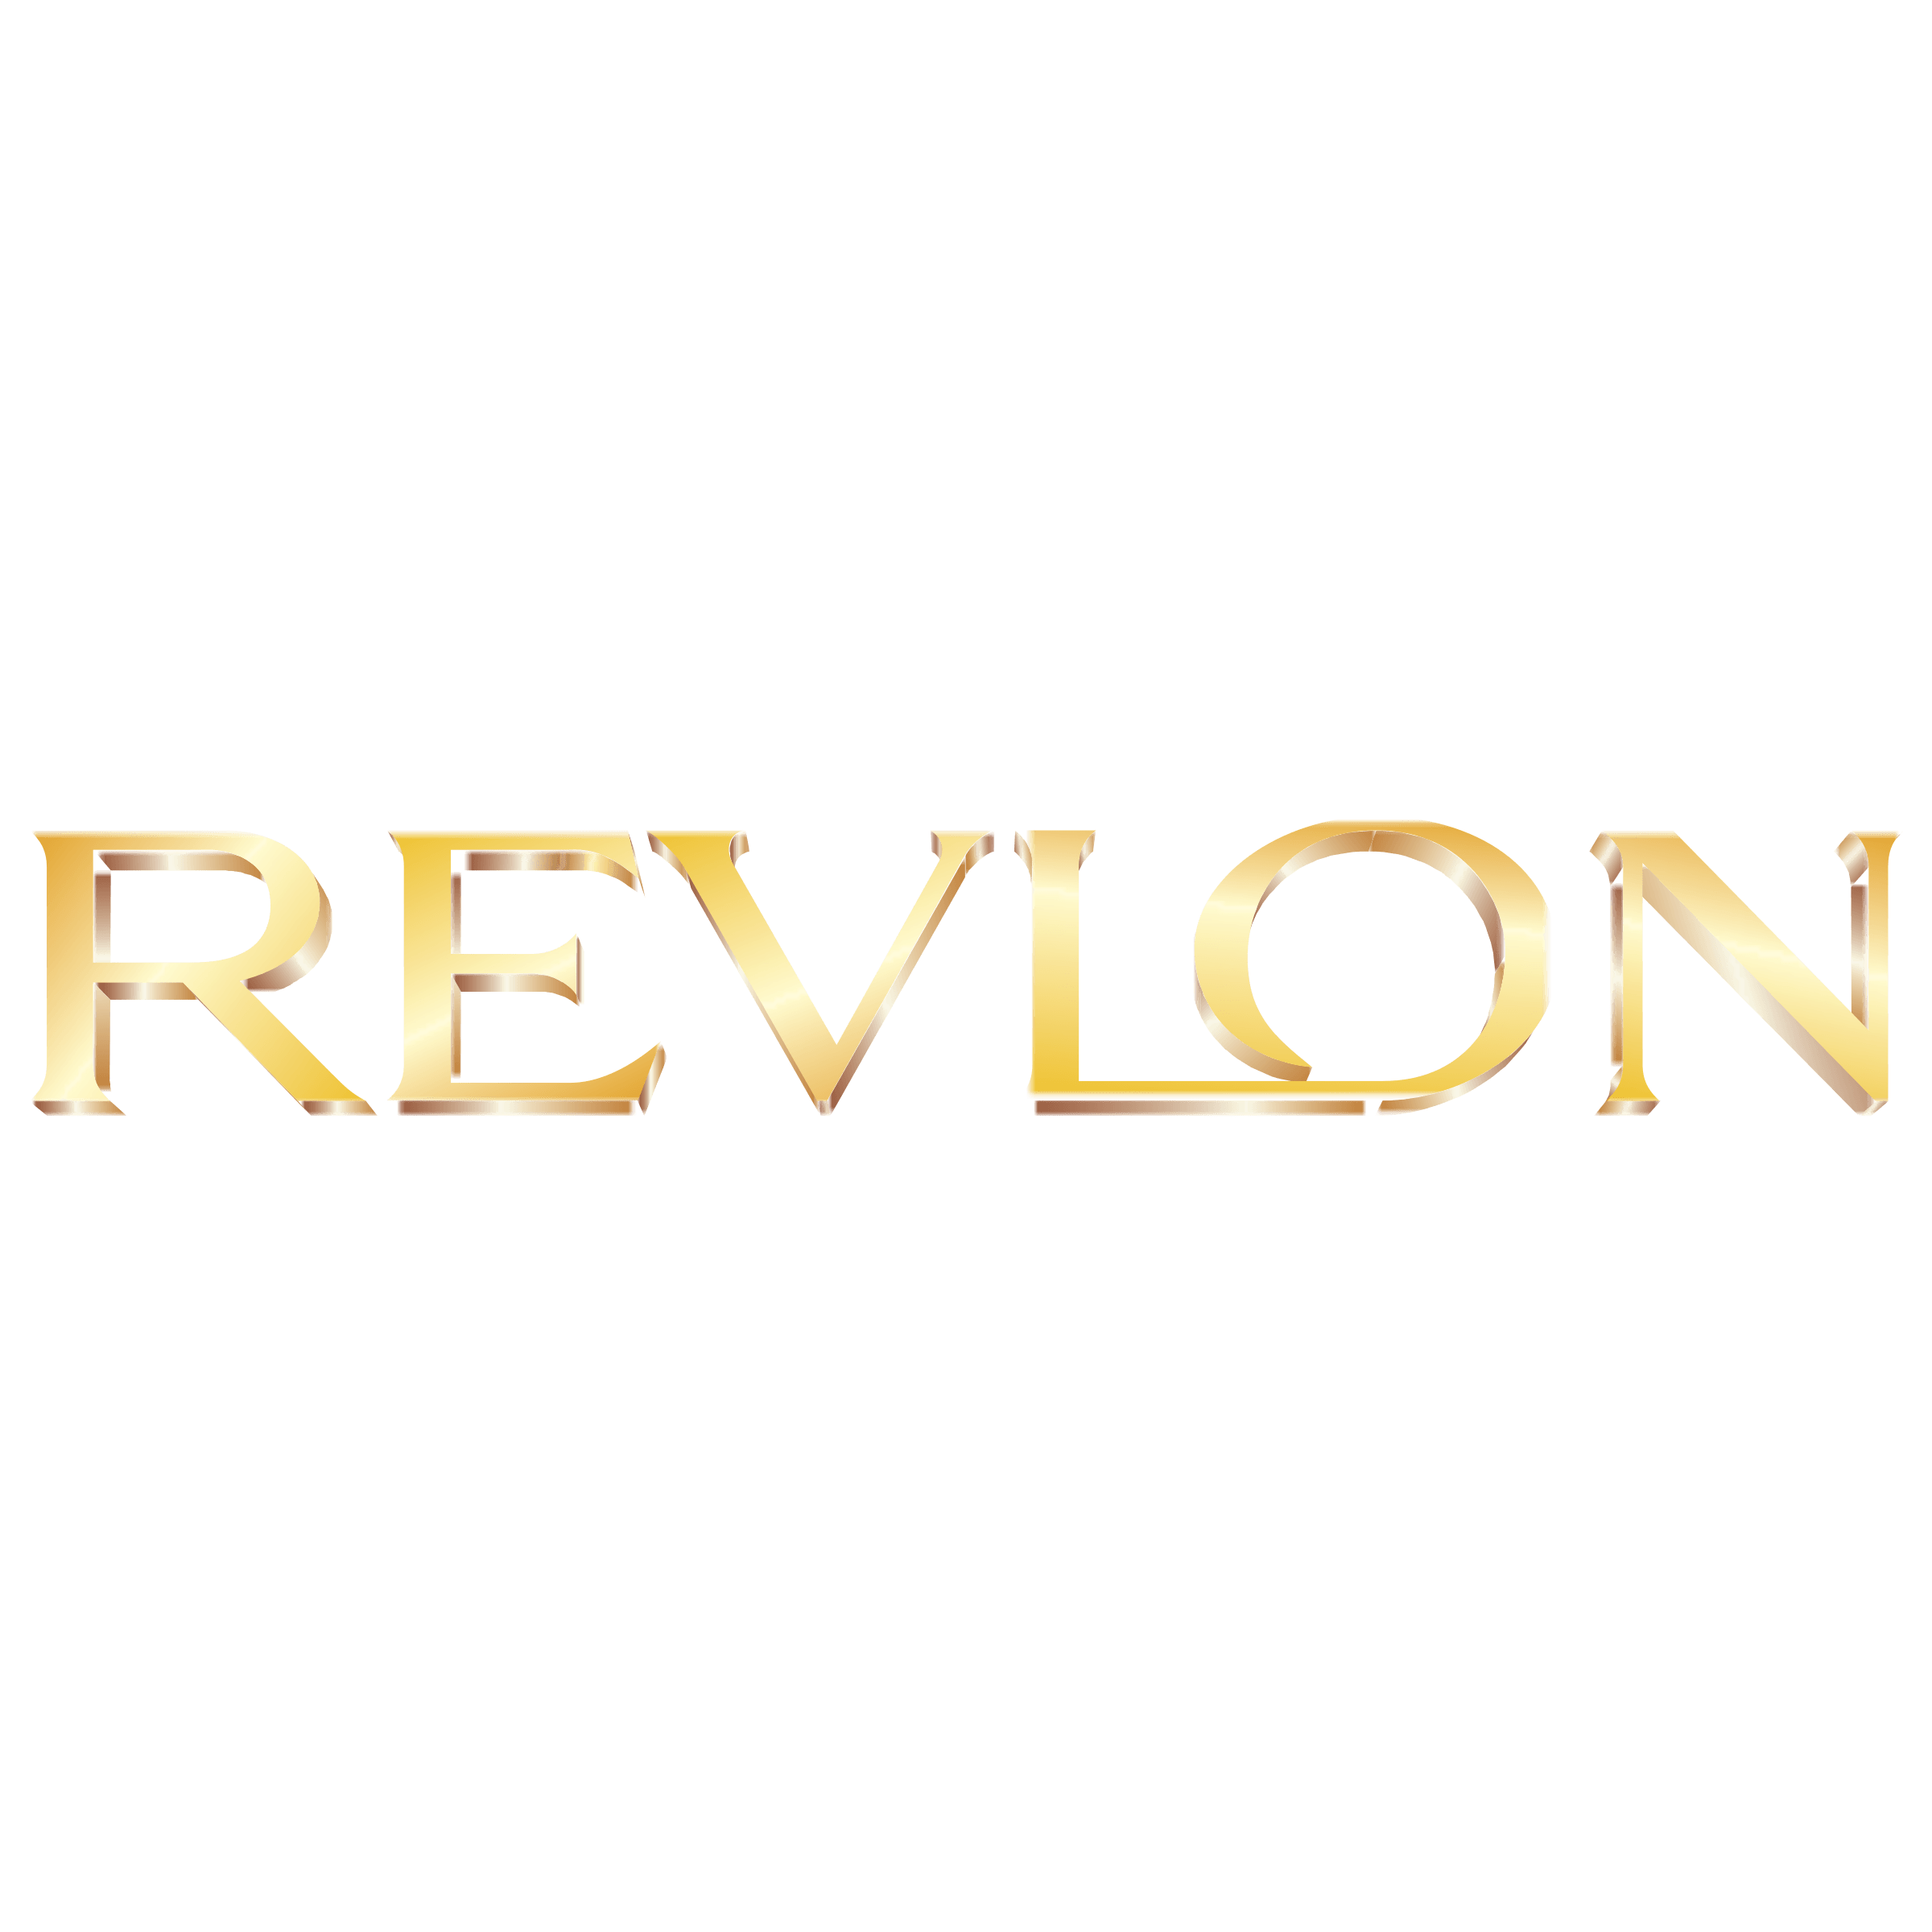 Revlon Logo - Revlon Logo PNG Transparent & SVG Vector - Freebie Supply